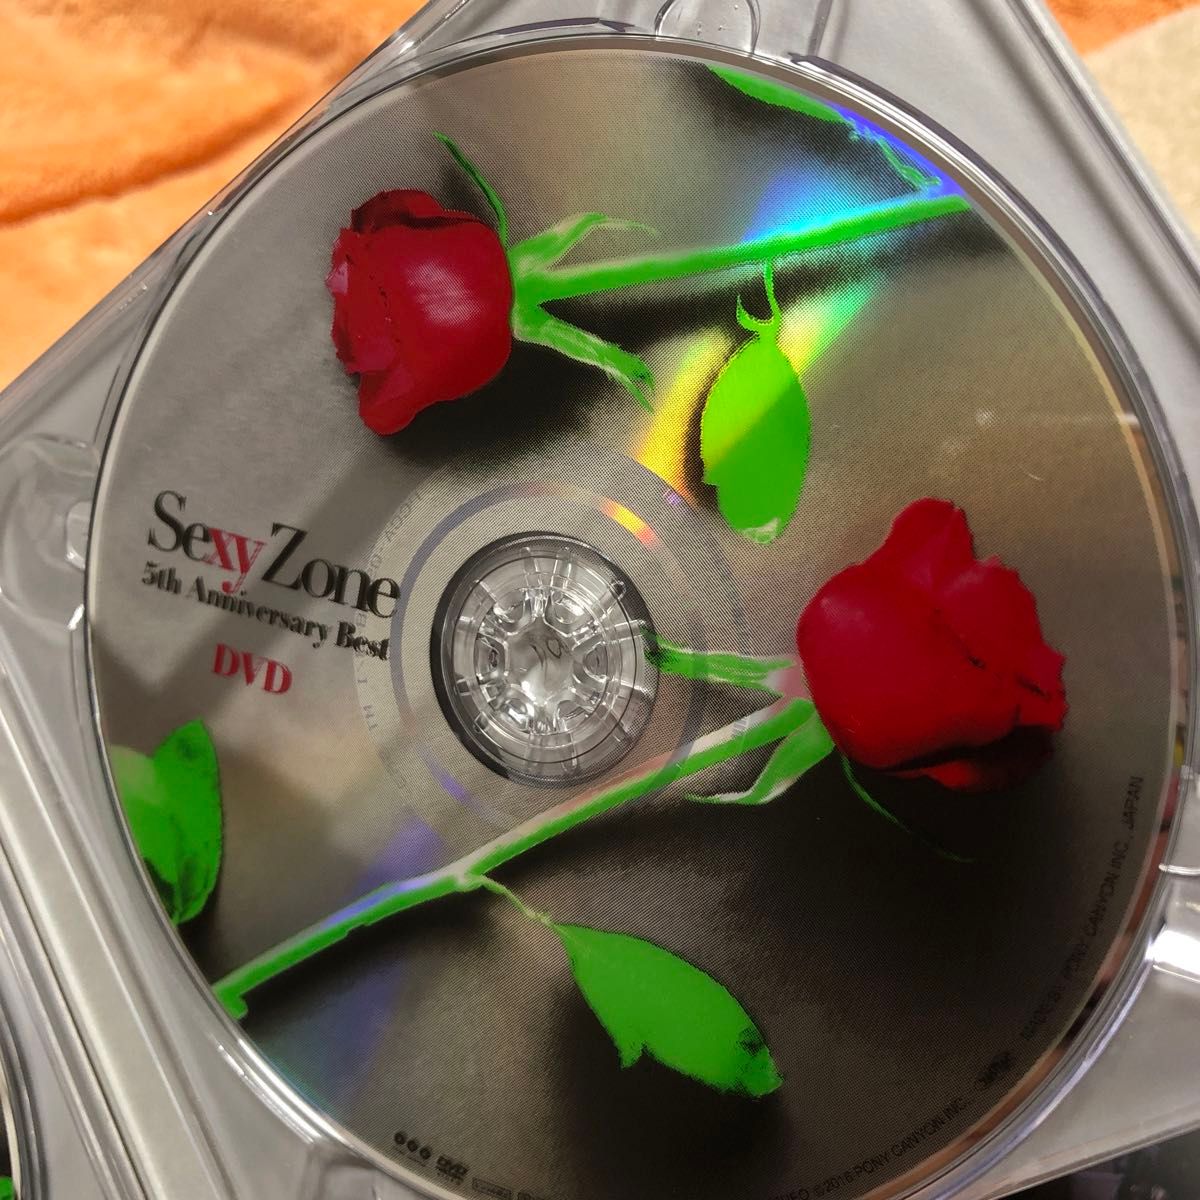 Sexy Zone 5th Anniversary Best (初回限定盤B) (DVD付) CD 